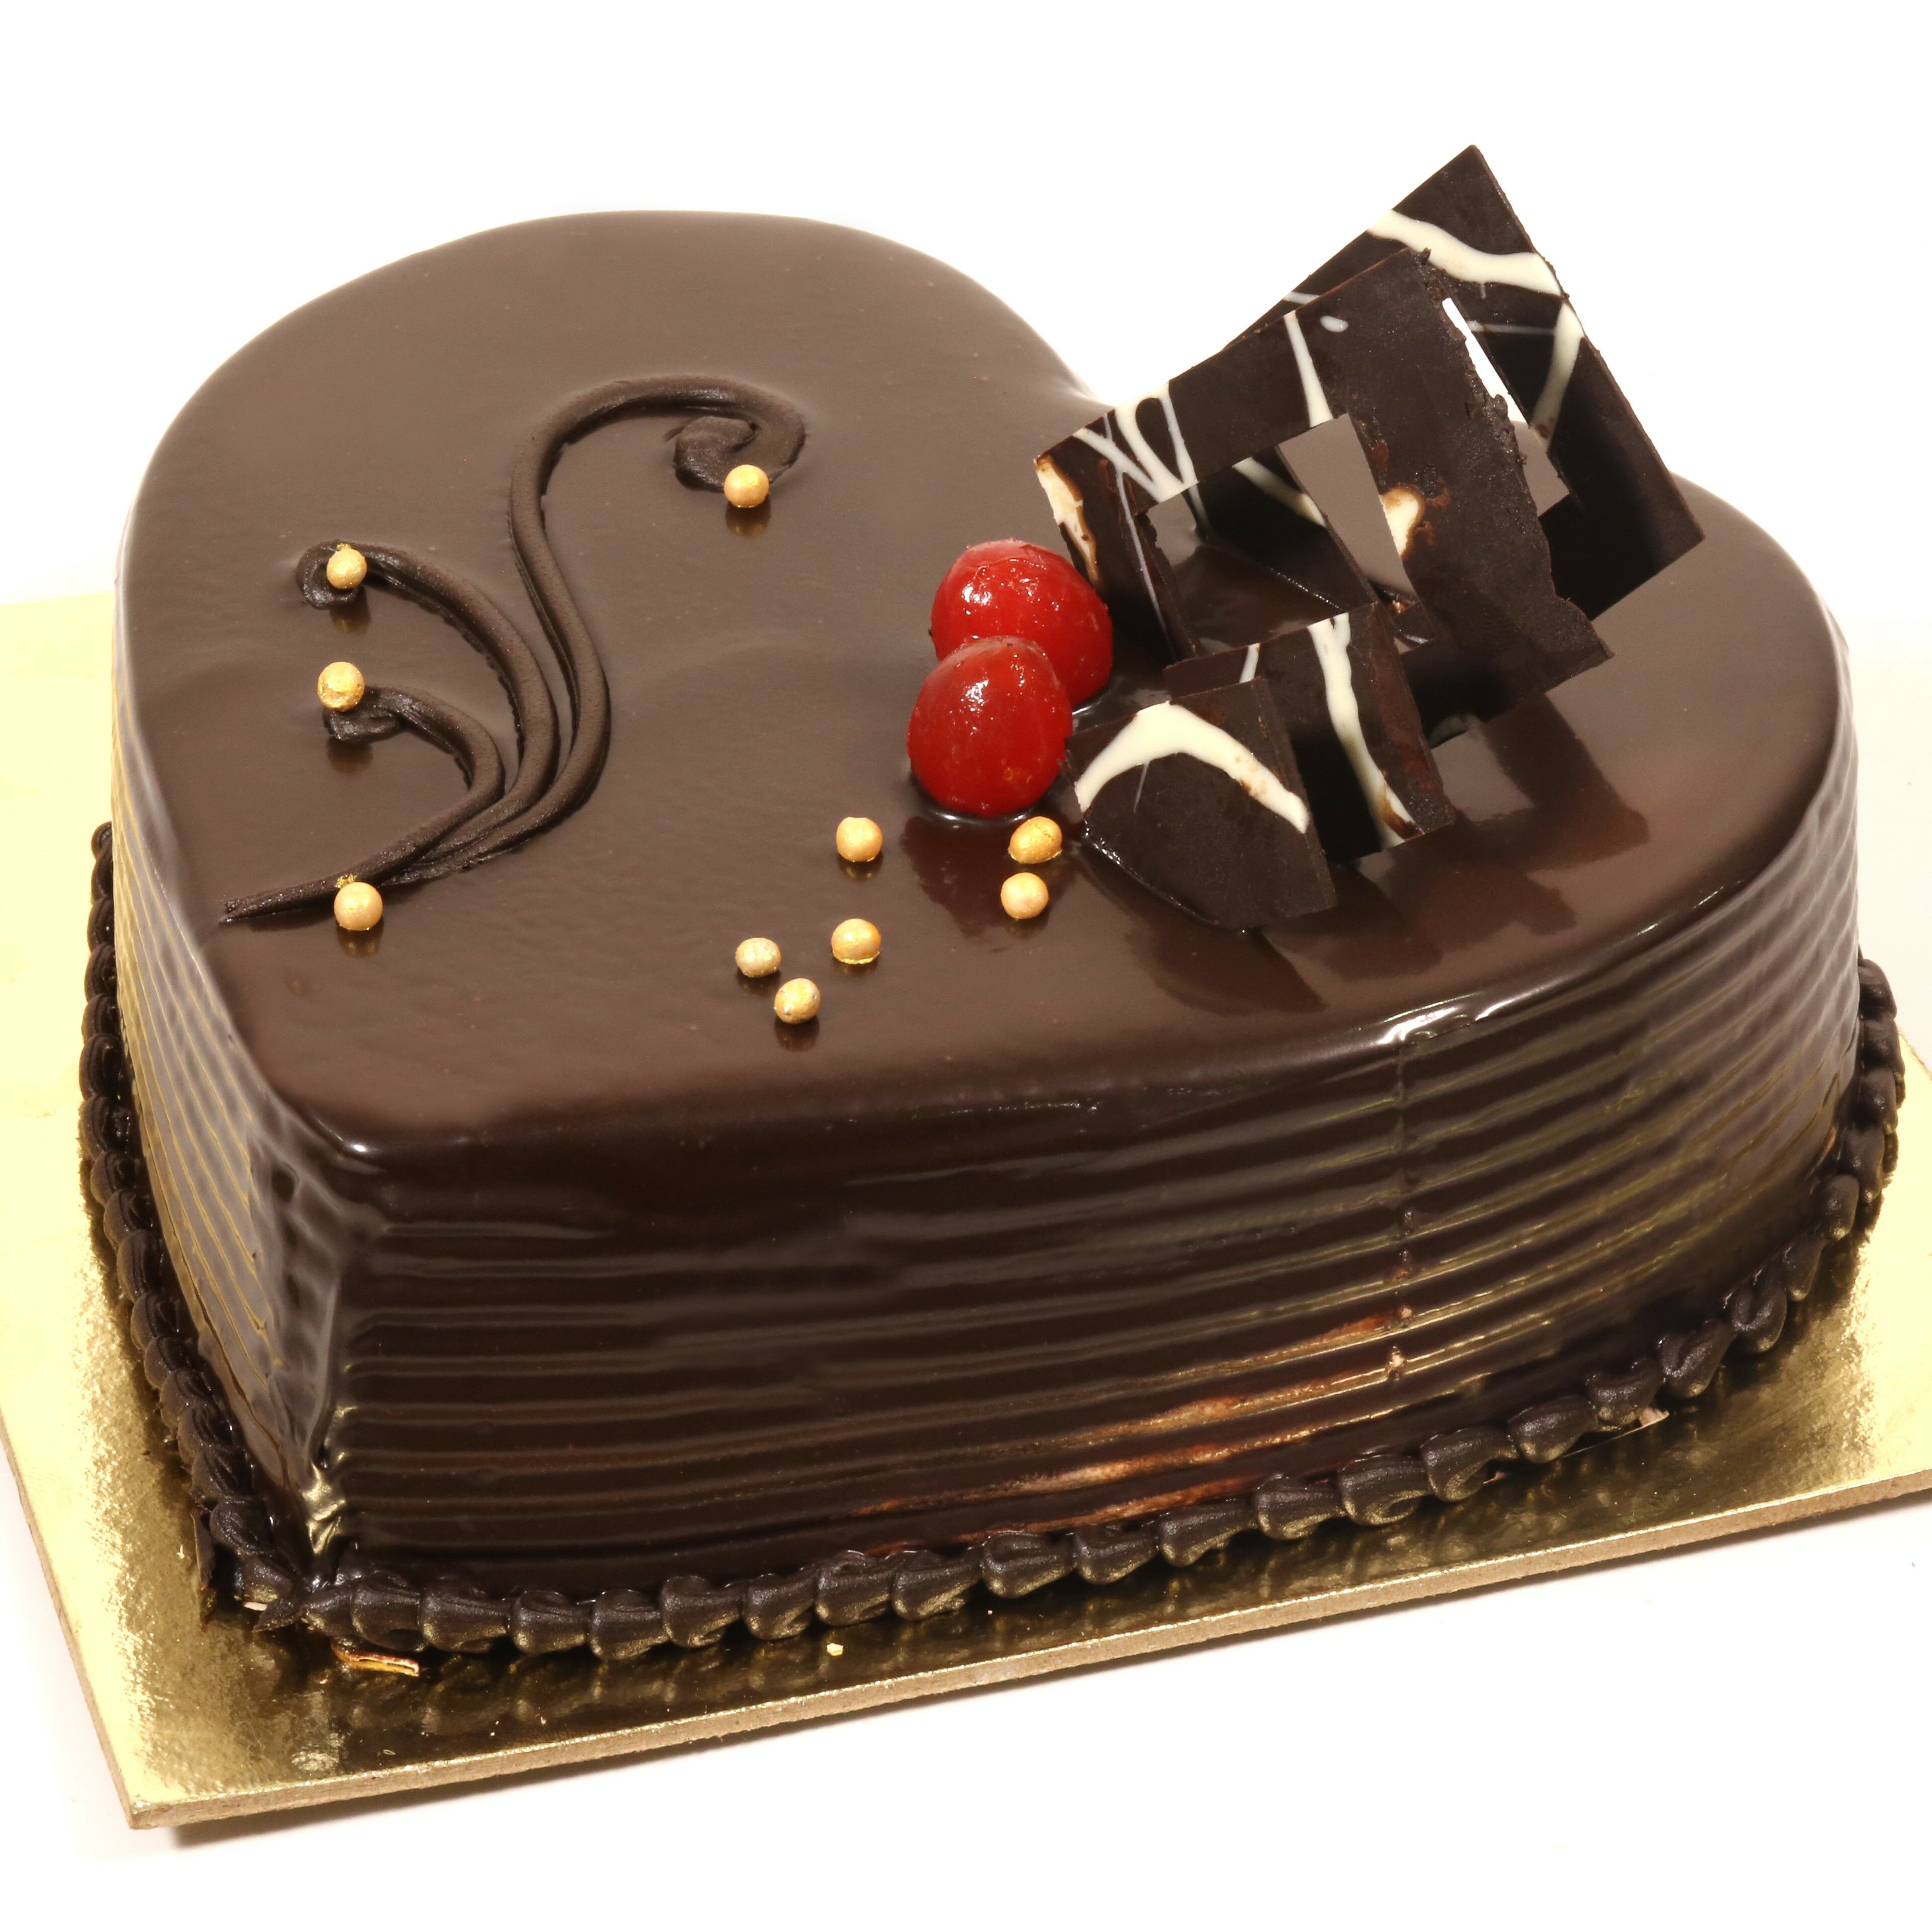 Sweet Heart Chocolate Cake